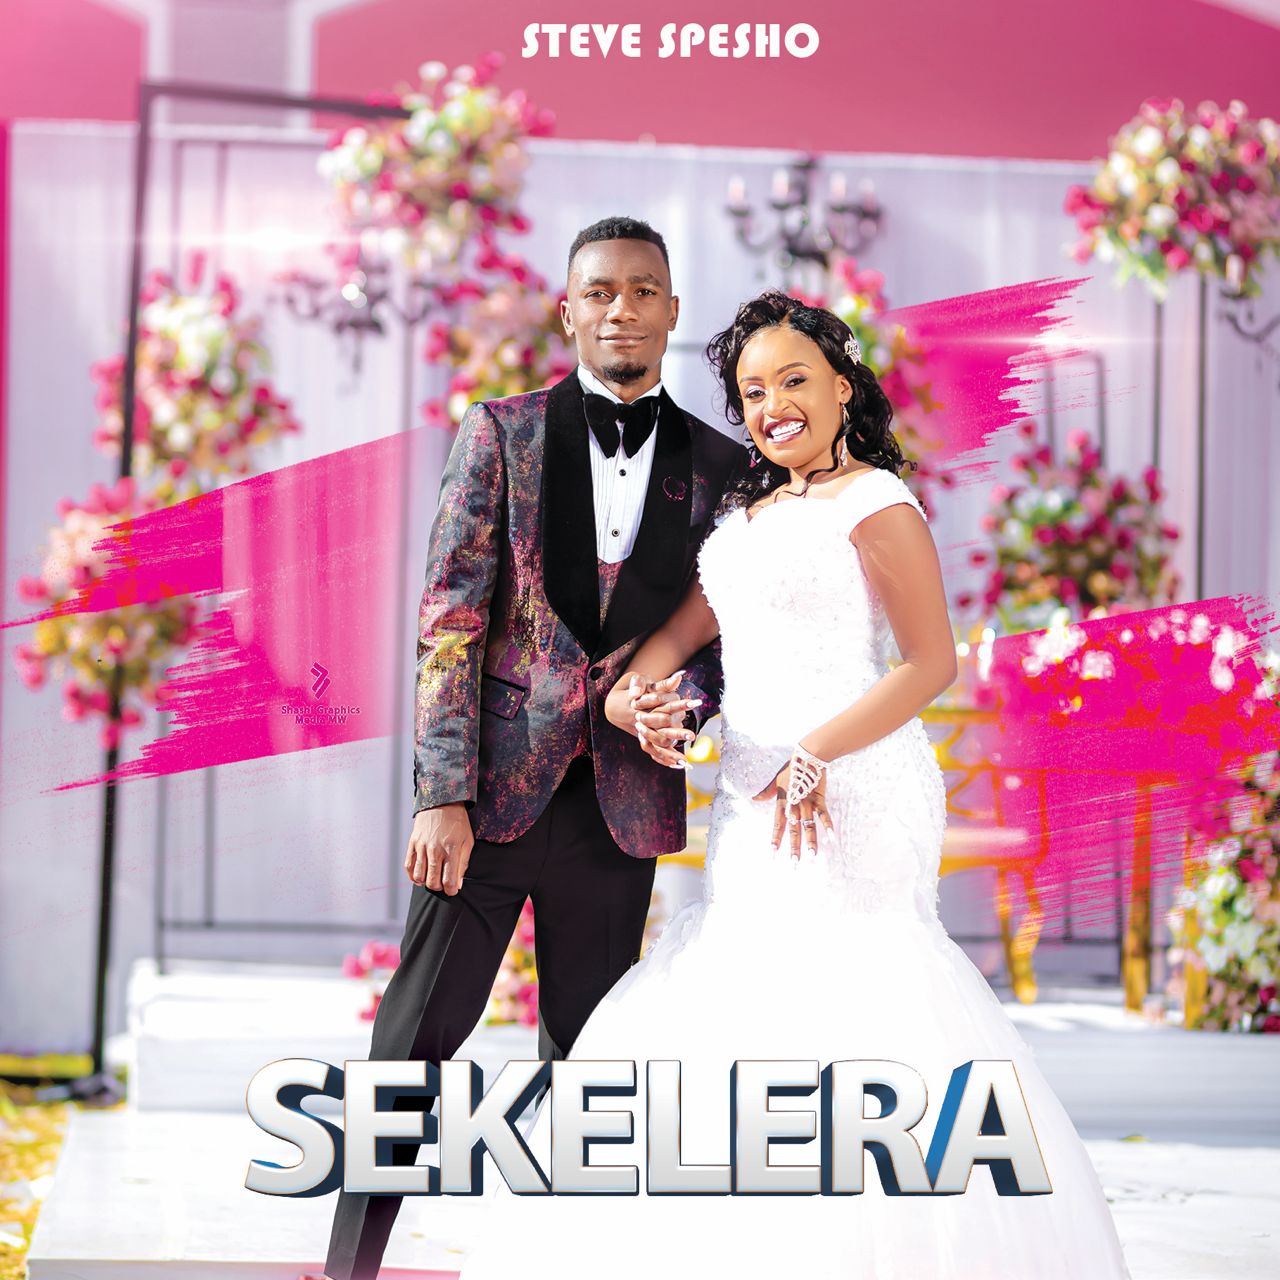  Steve_Spesho_-_SekeleraPatrick-And-Miracle-Chinga-Mpukunya-Wedding-Dedication